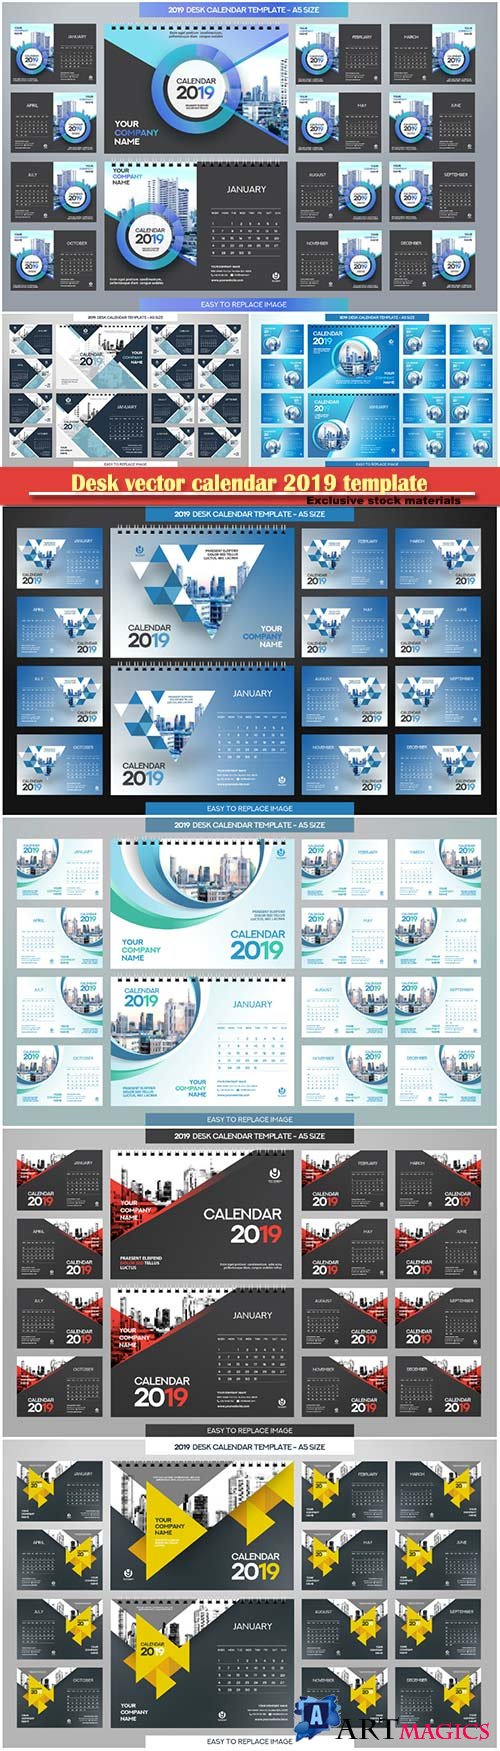 Desk vector calendar 2019 template, 12 months included